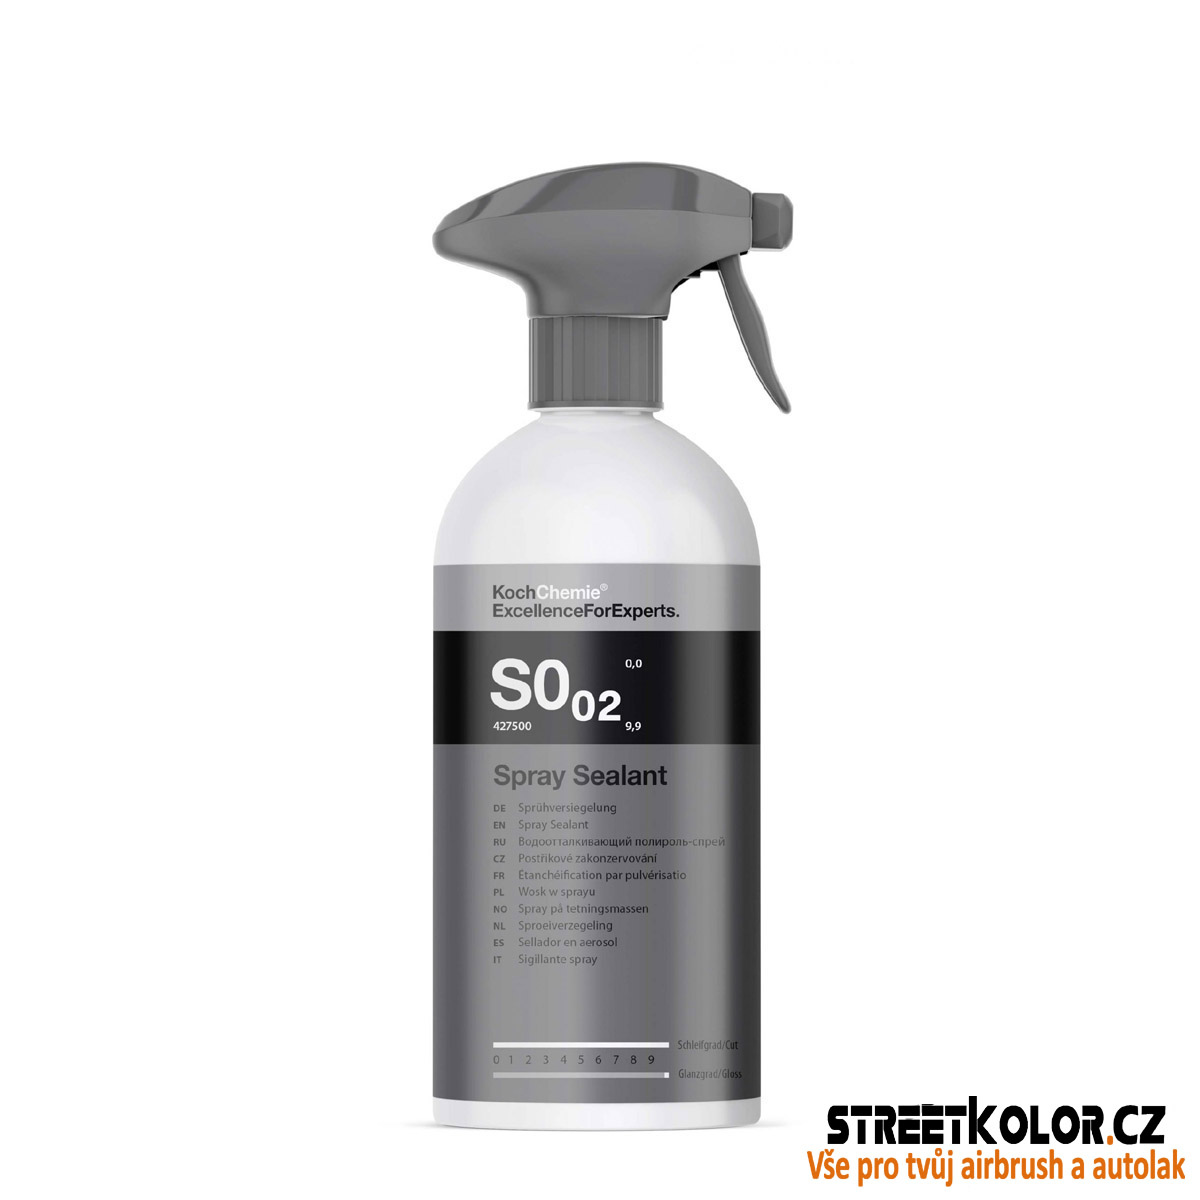 KochChemie S0.02 Tekutý vosk s dlouhodobou ochranou laku Spray Sealant 500ml